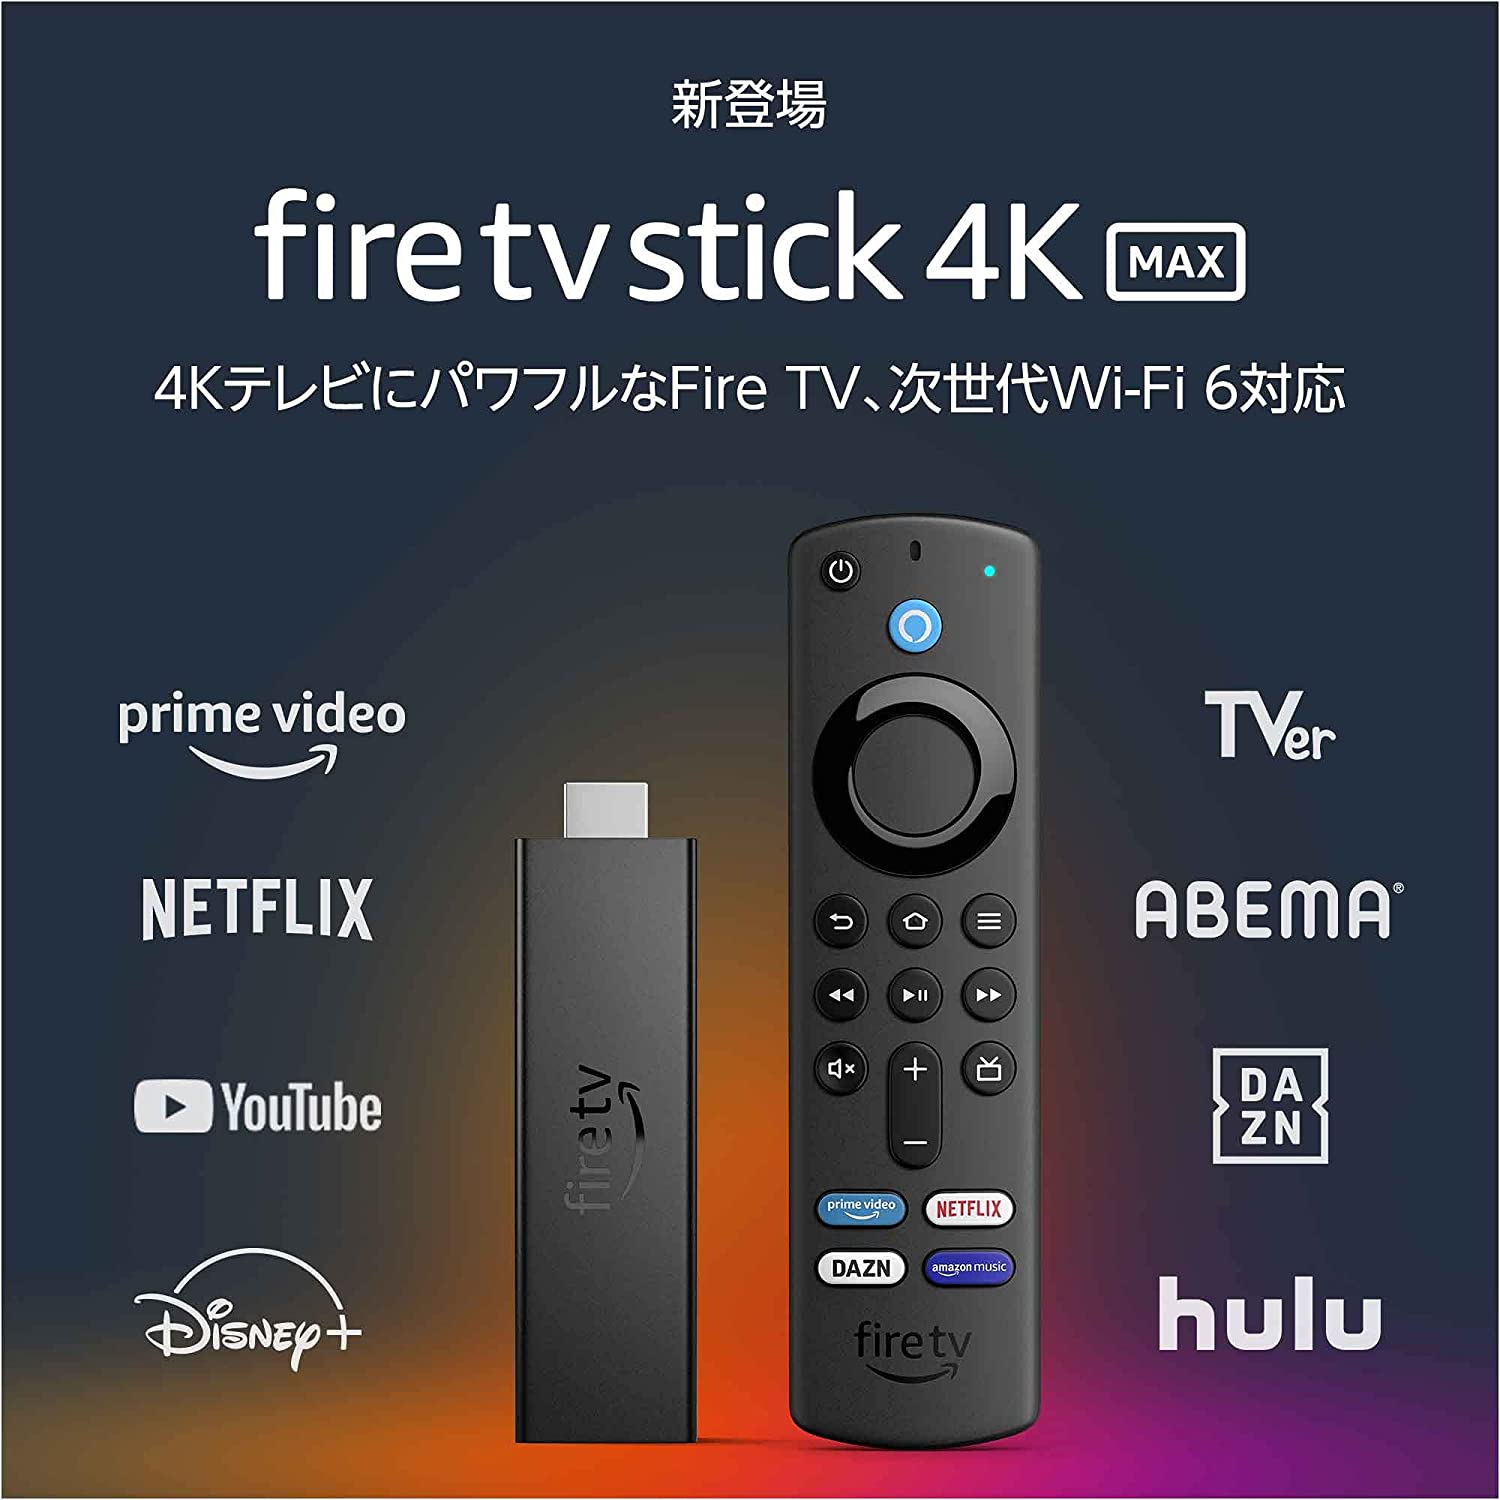 4K対応版 Fire TV stick